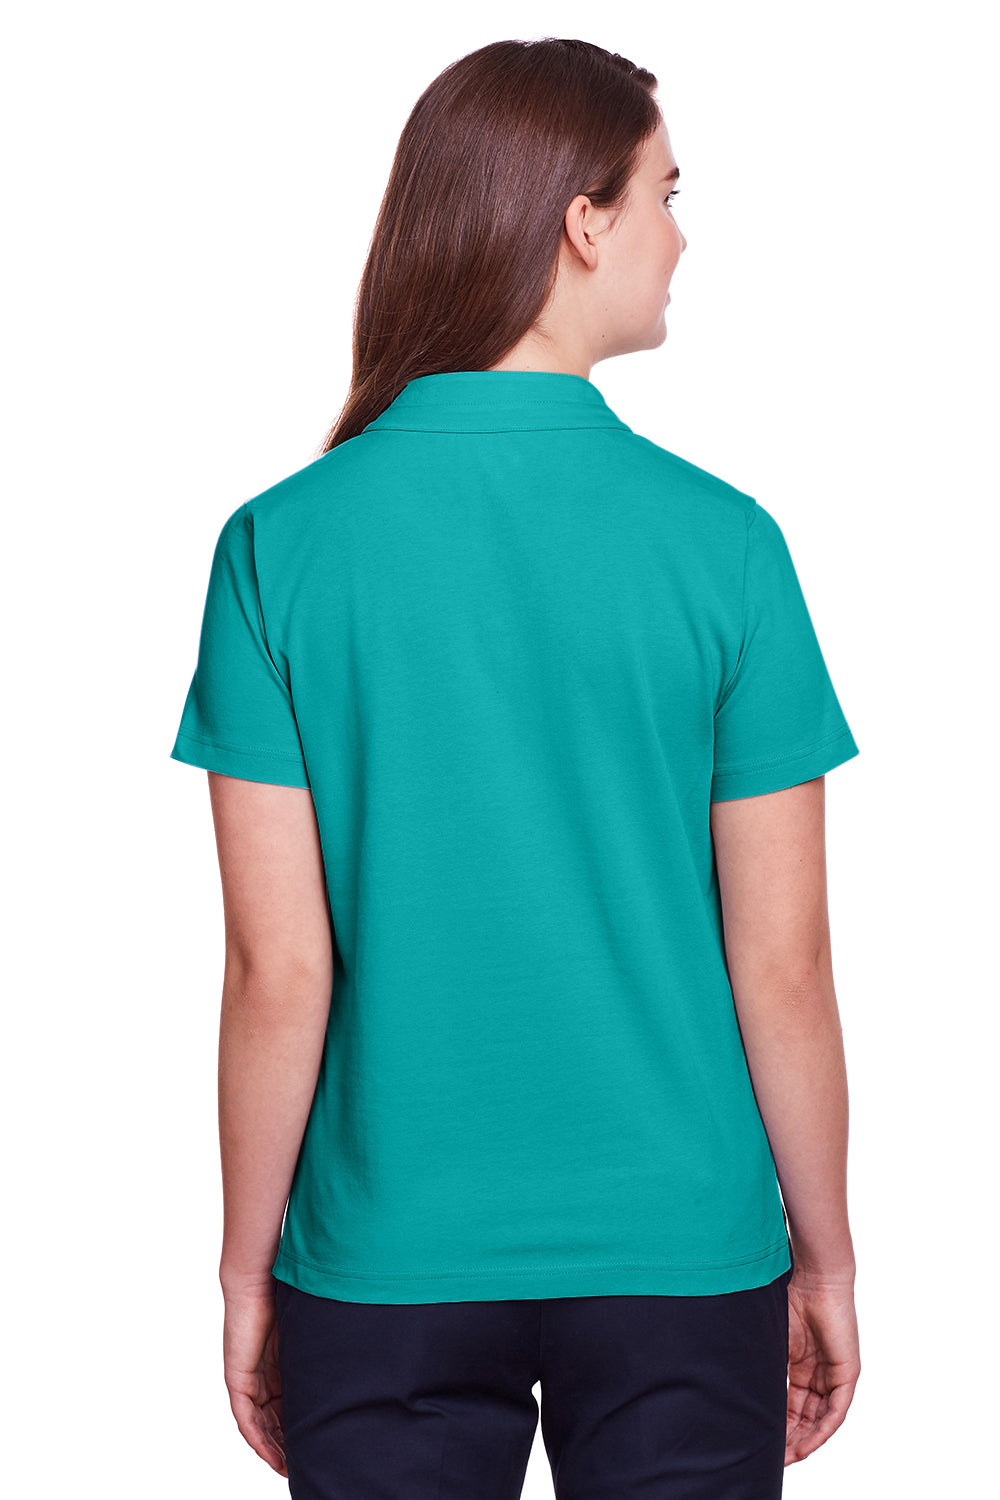 UltraClub UC105W Womens Lakeshore Performance Moisture Wicking Short Sleeve Polo Shirt Jade Green Back